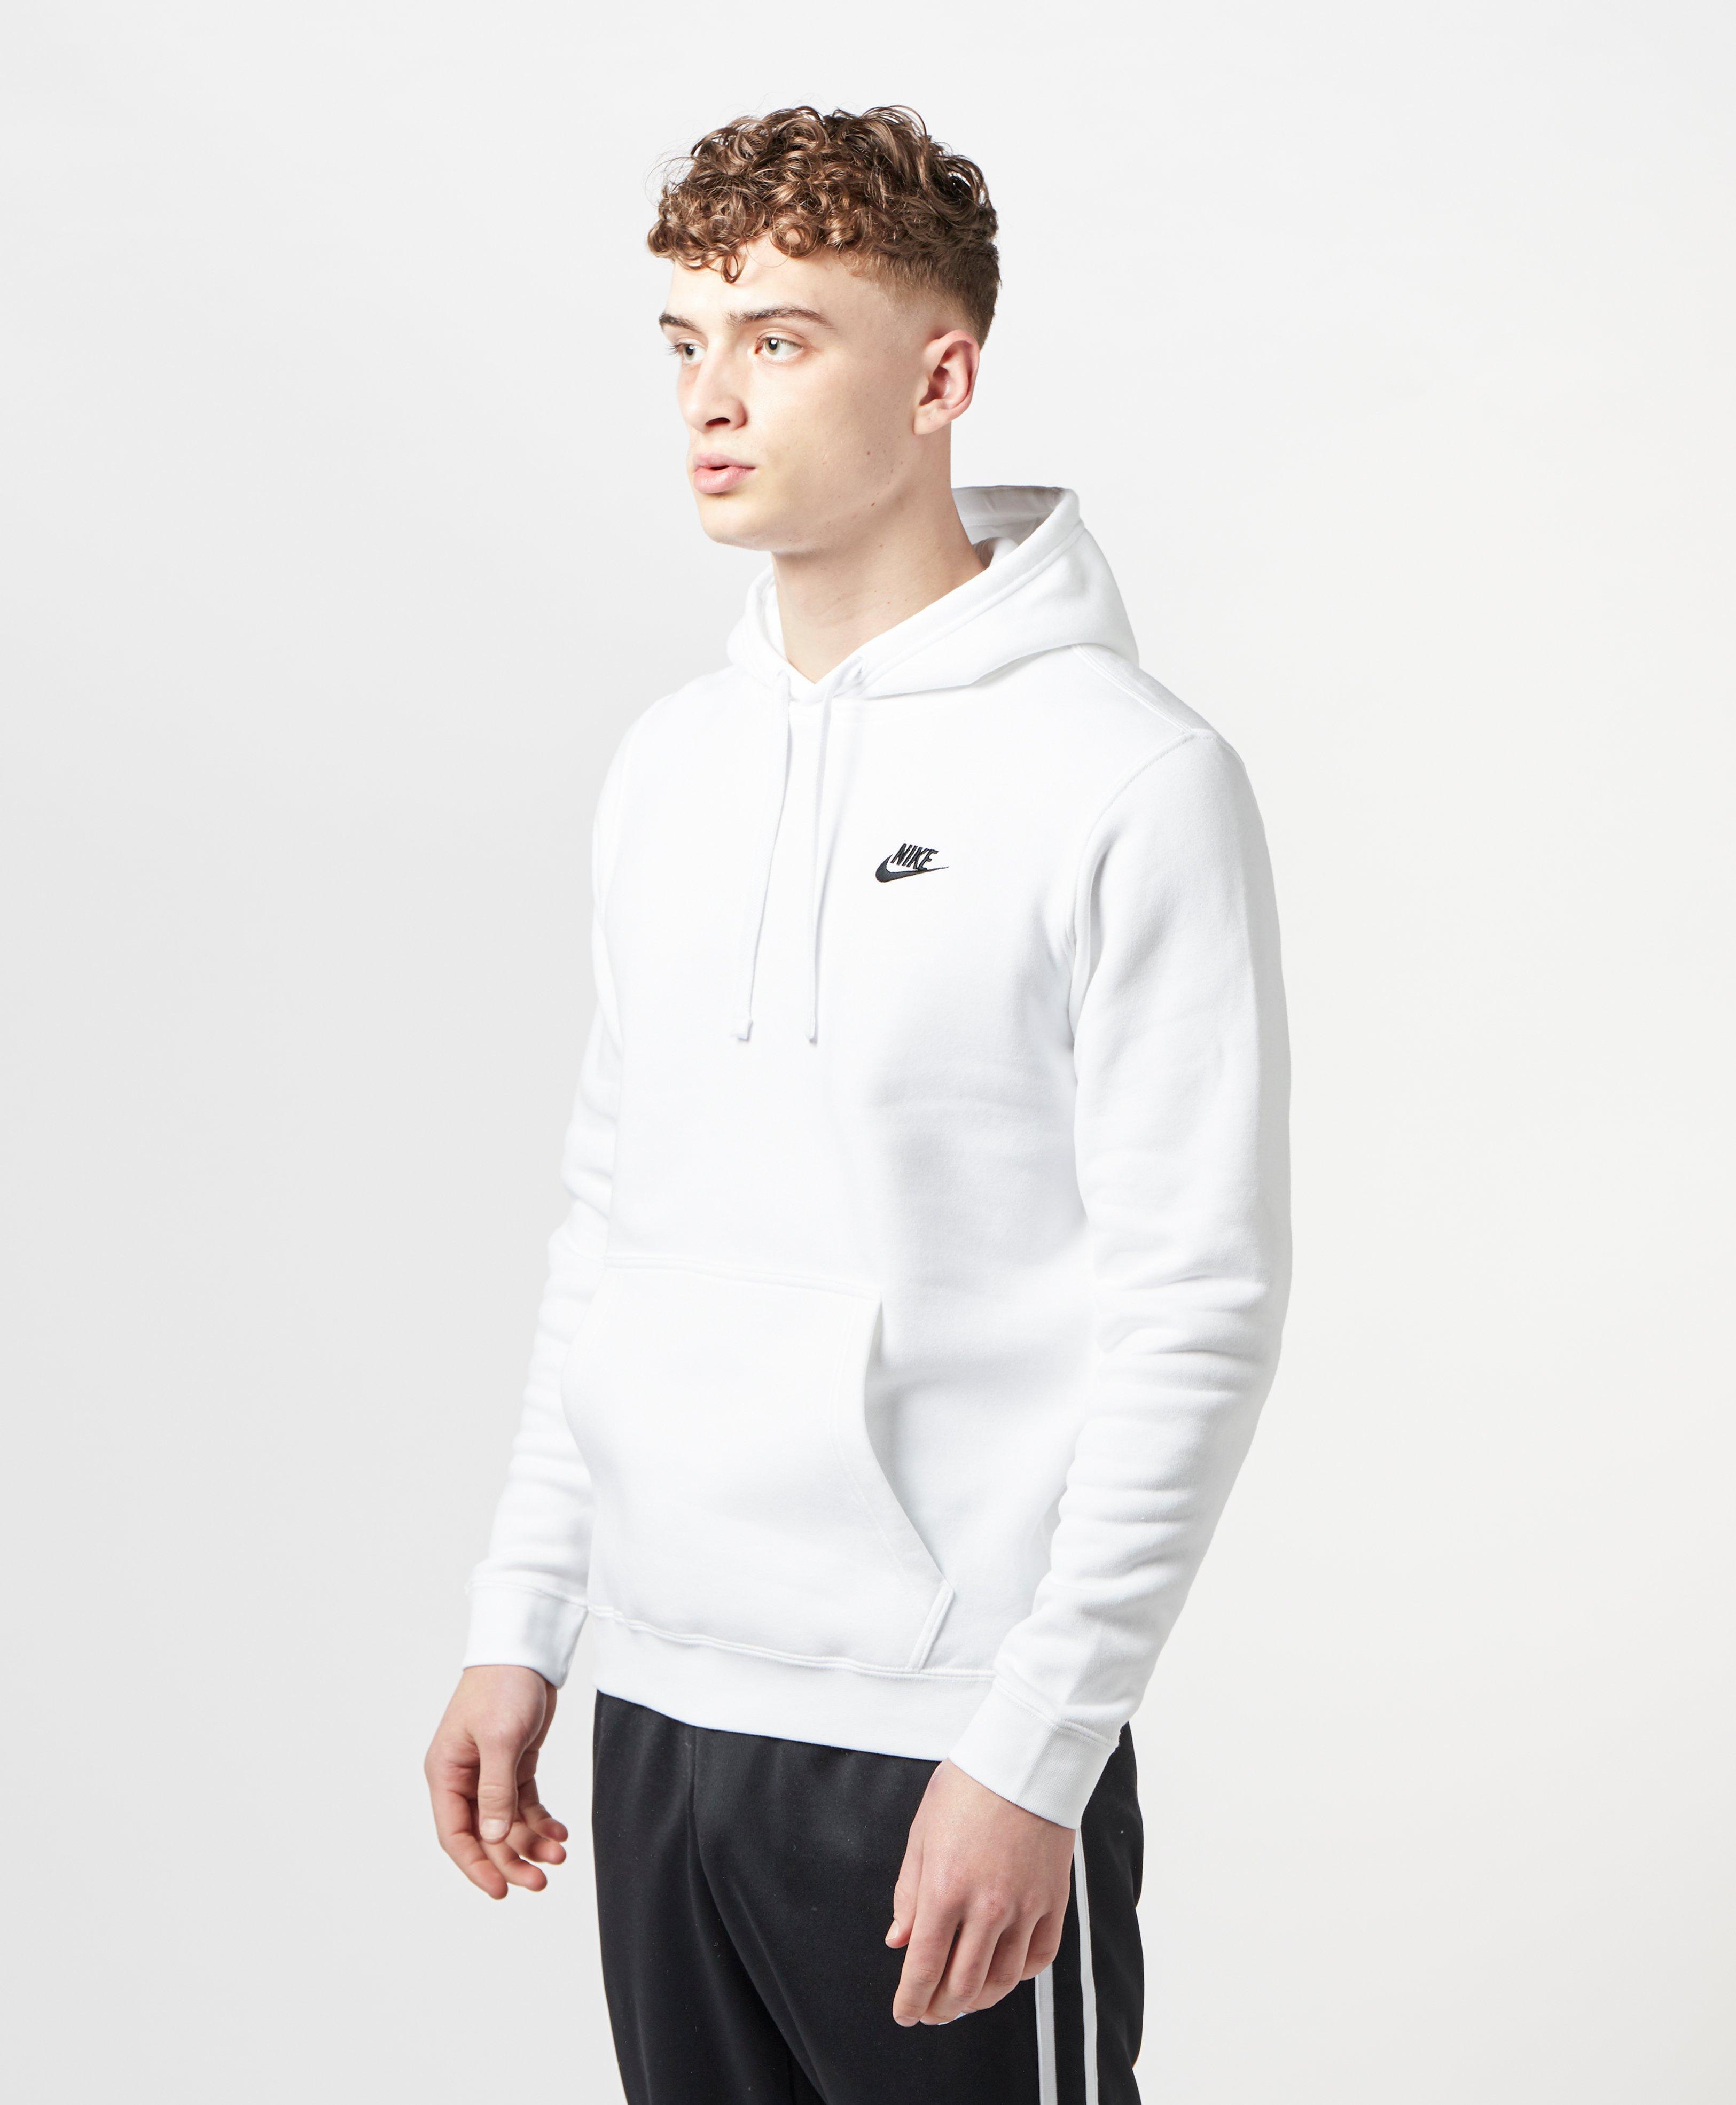 Nike Fleece Foundation Overhead Hoodie in White for Men - Lyst